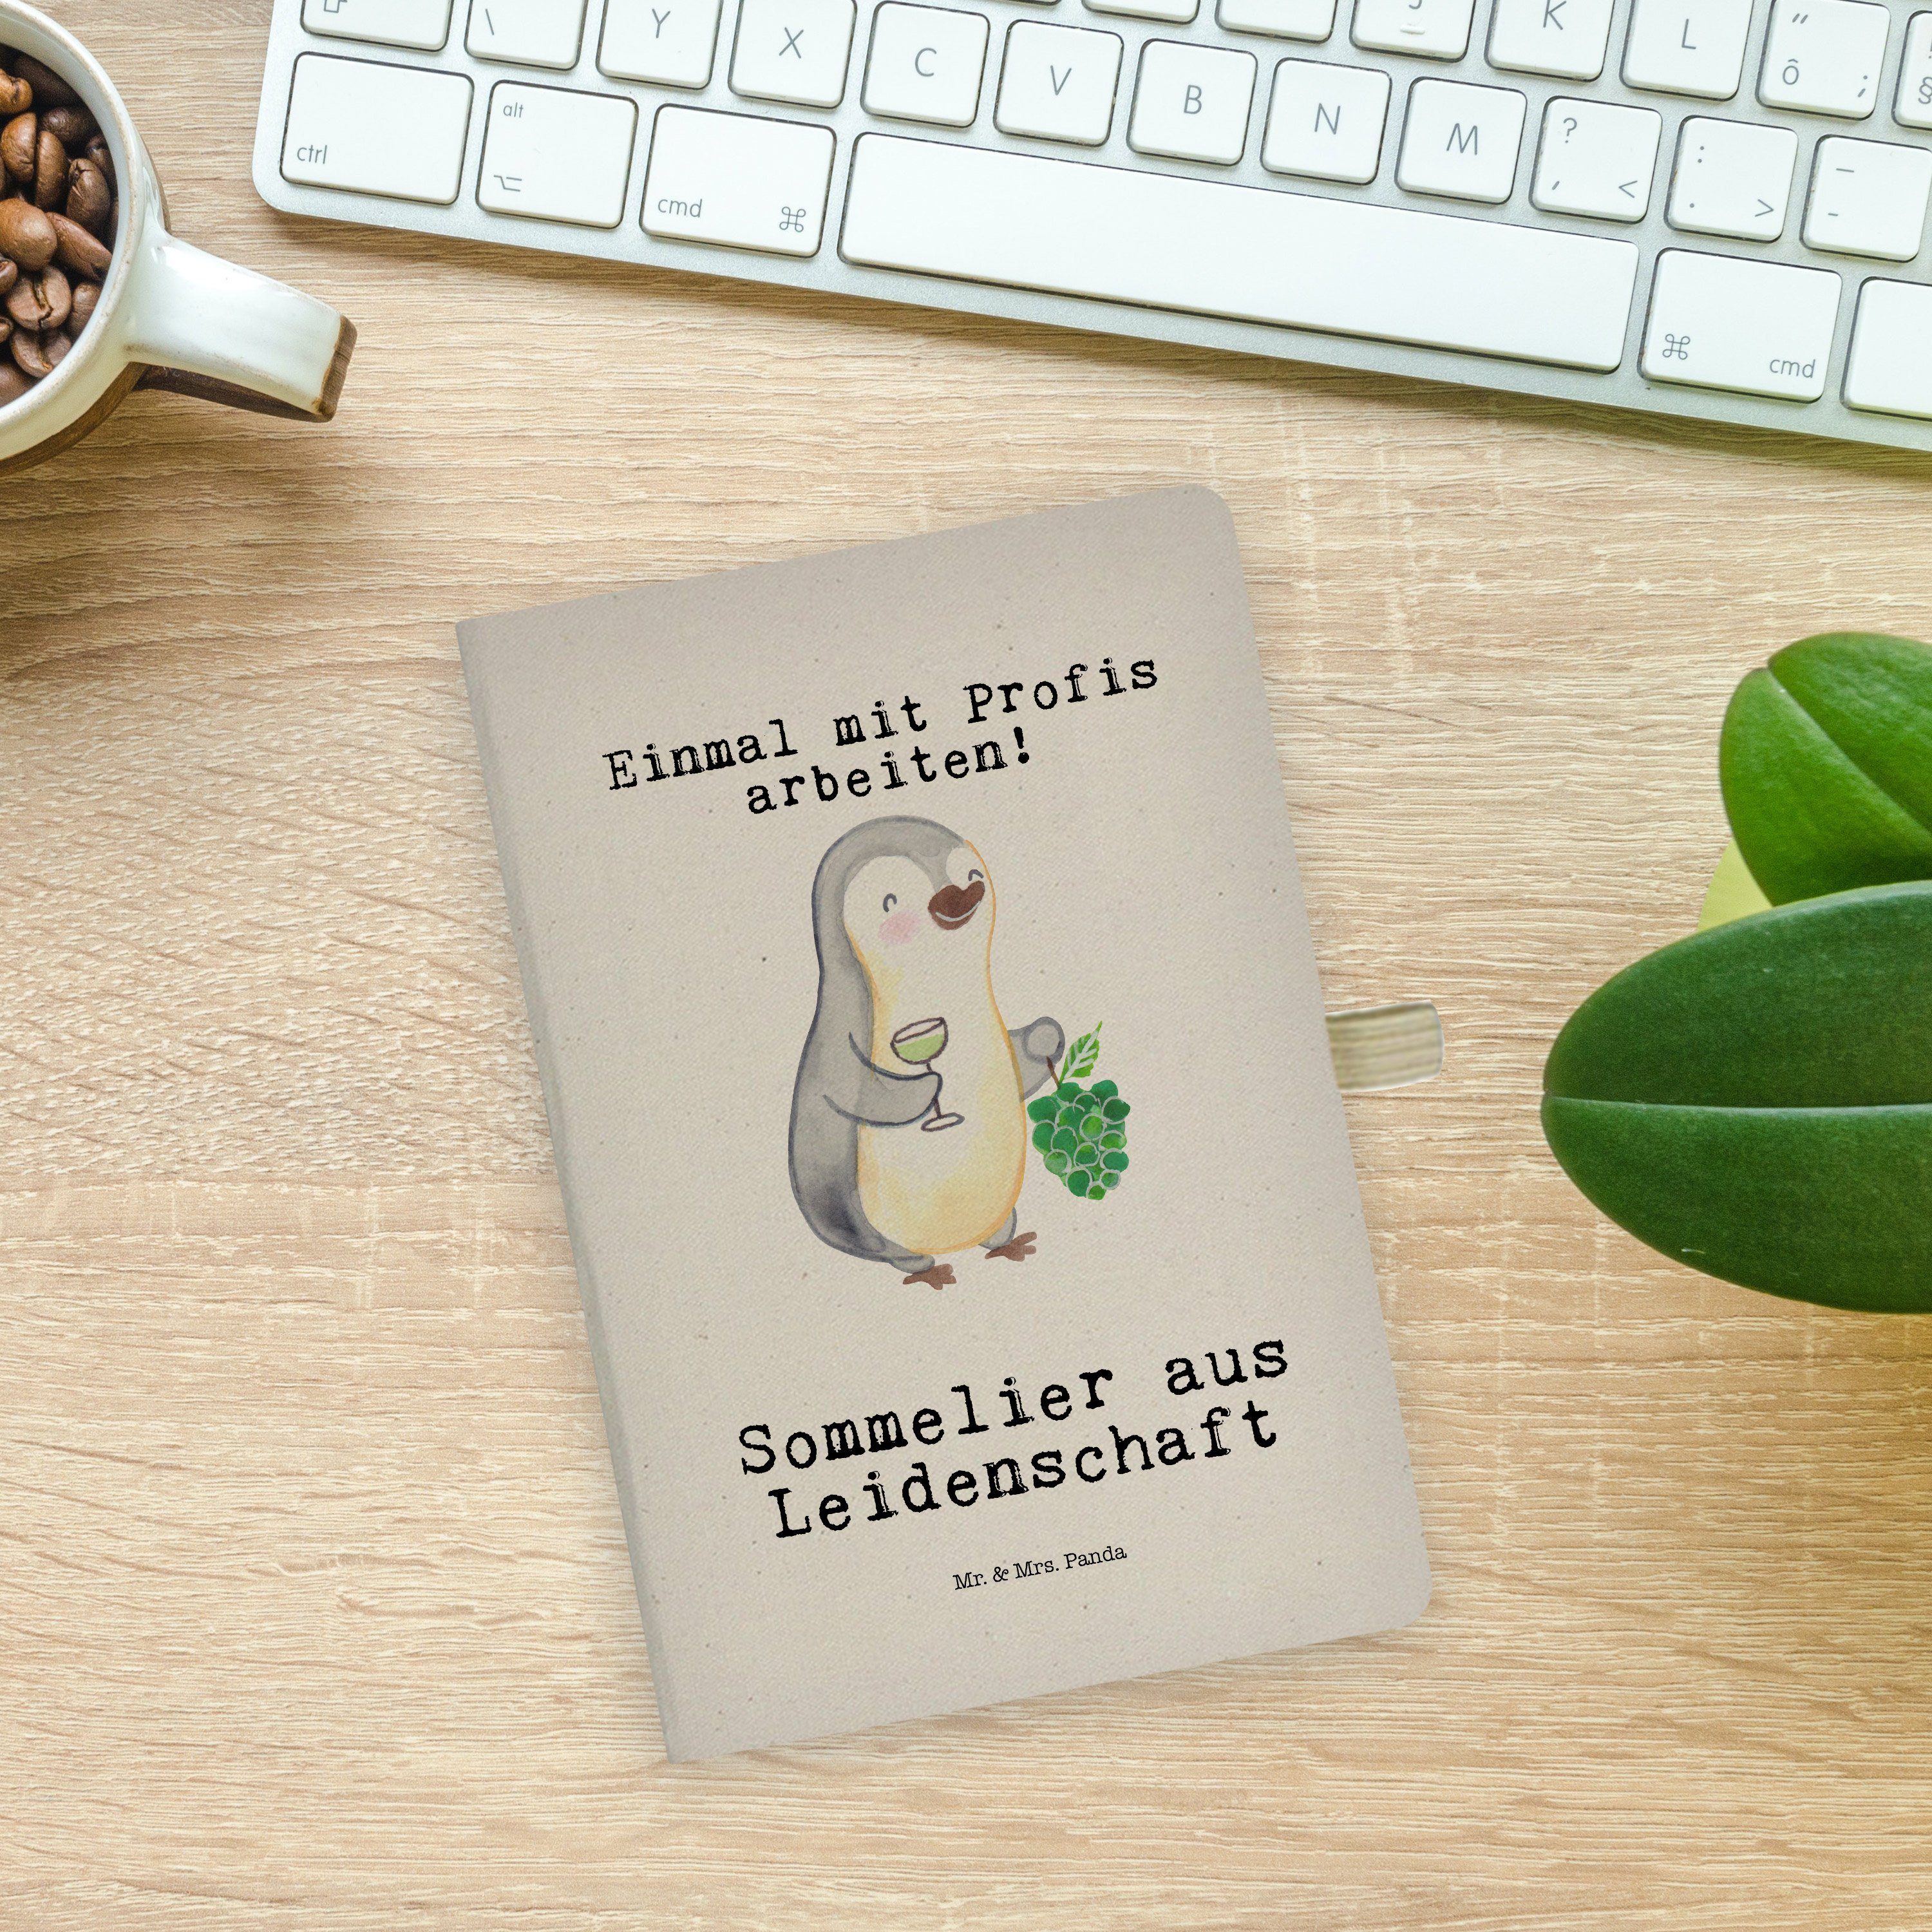 & Mrs. Leidenschaft aus Skizzenbuch, Transparent Abs Notizbuch - Mr. - Panda Mr. Panda Sommelier & Geschenk, Mrs.